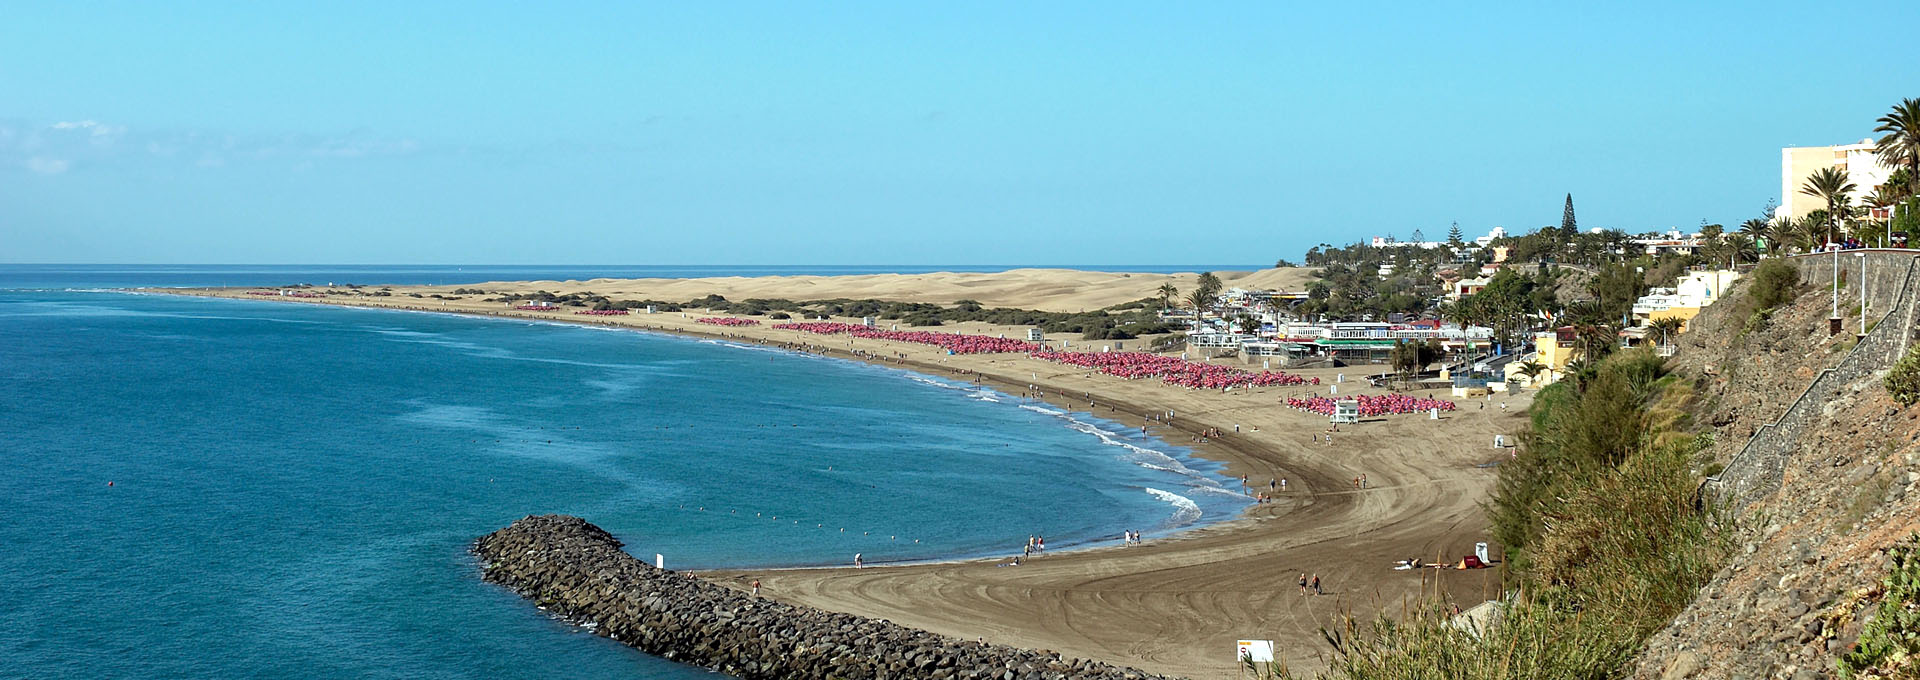 Playa del Inglés en Gran Canaria